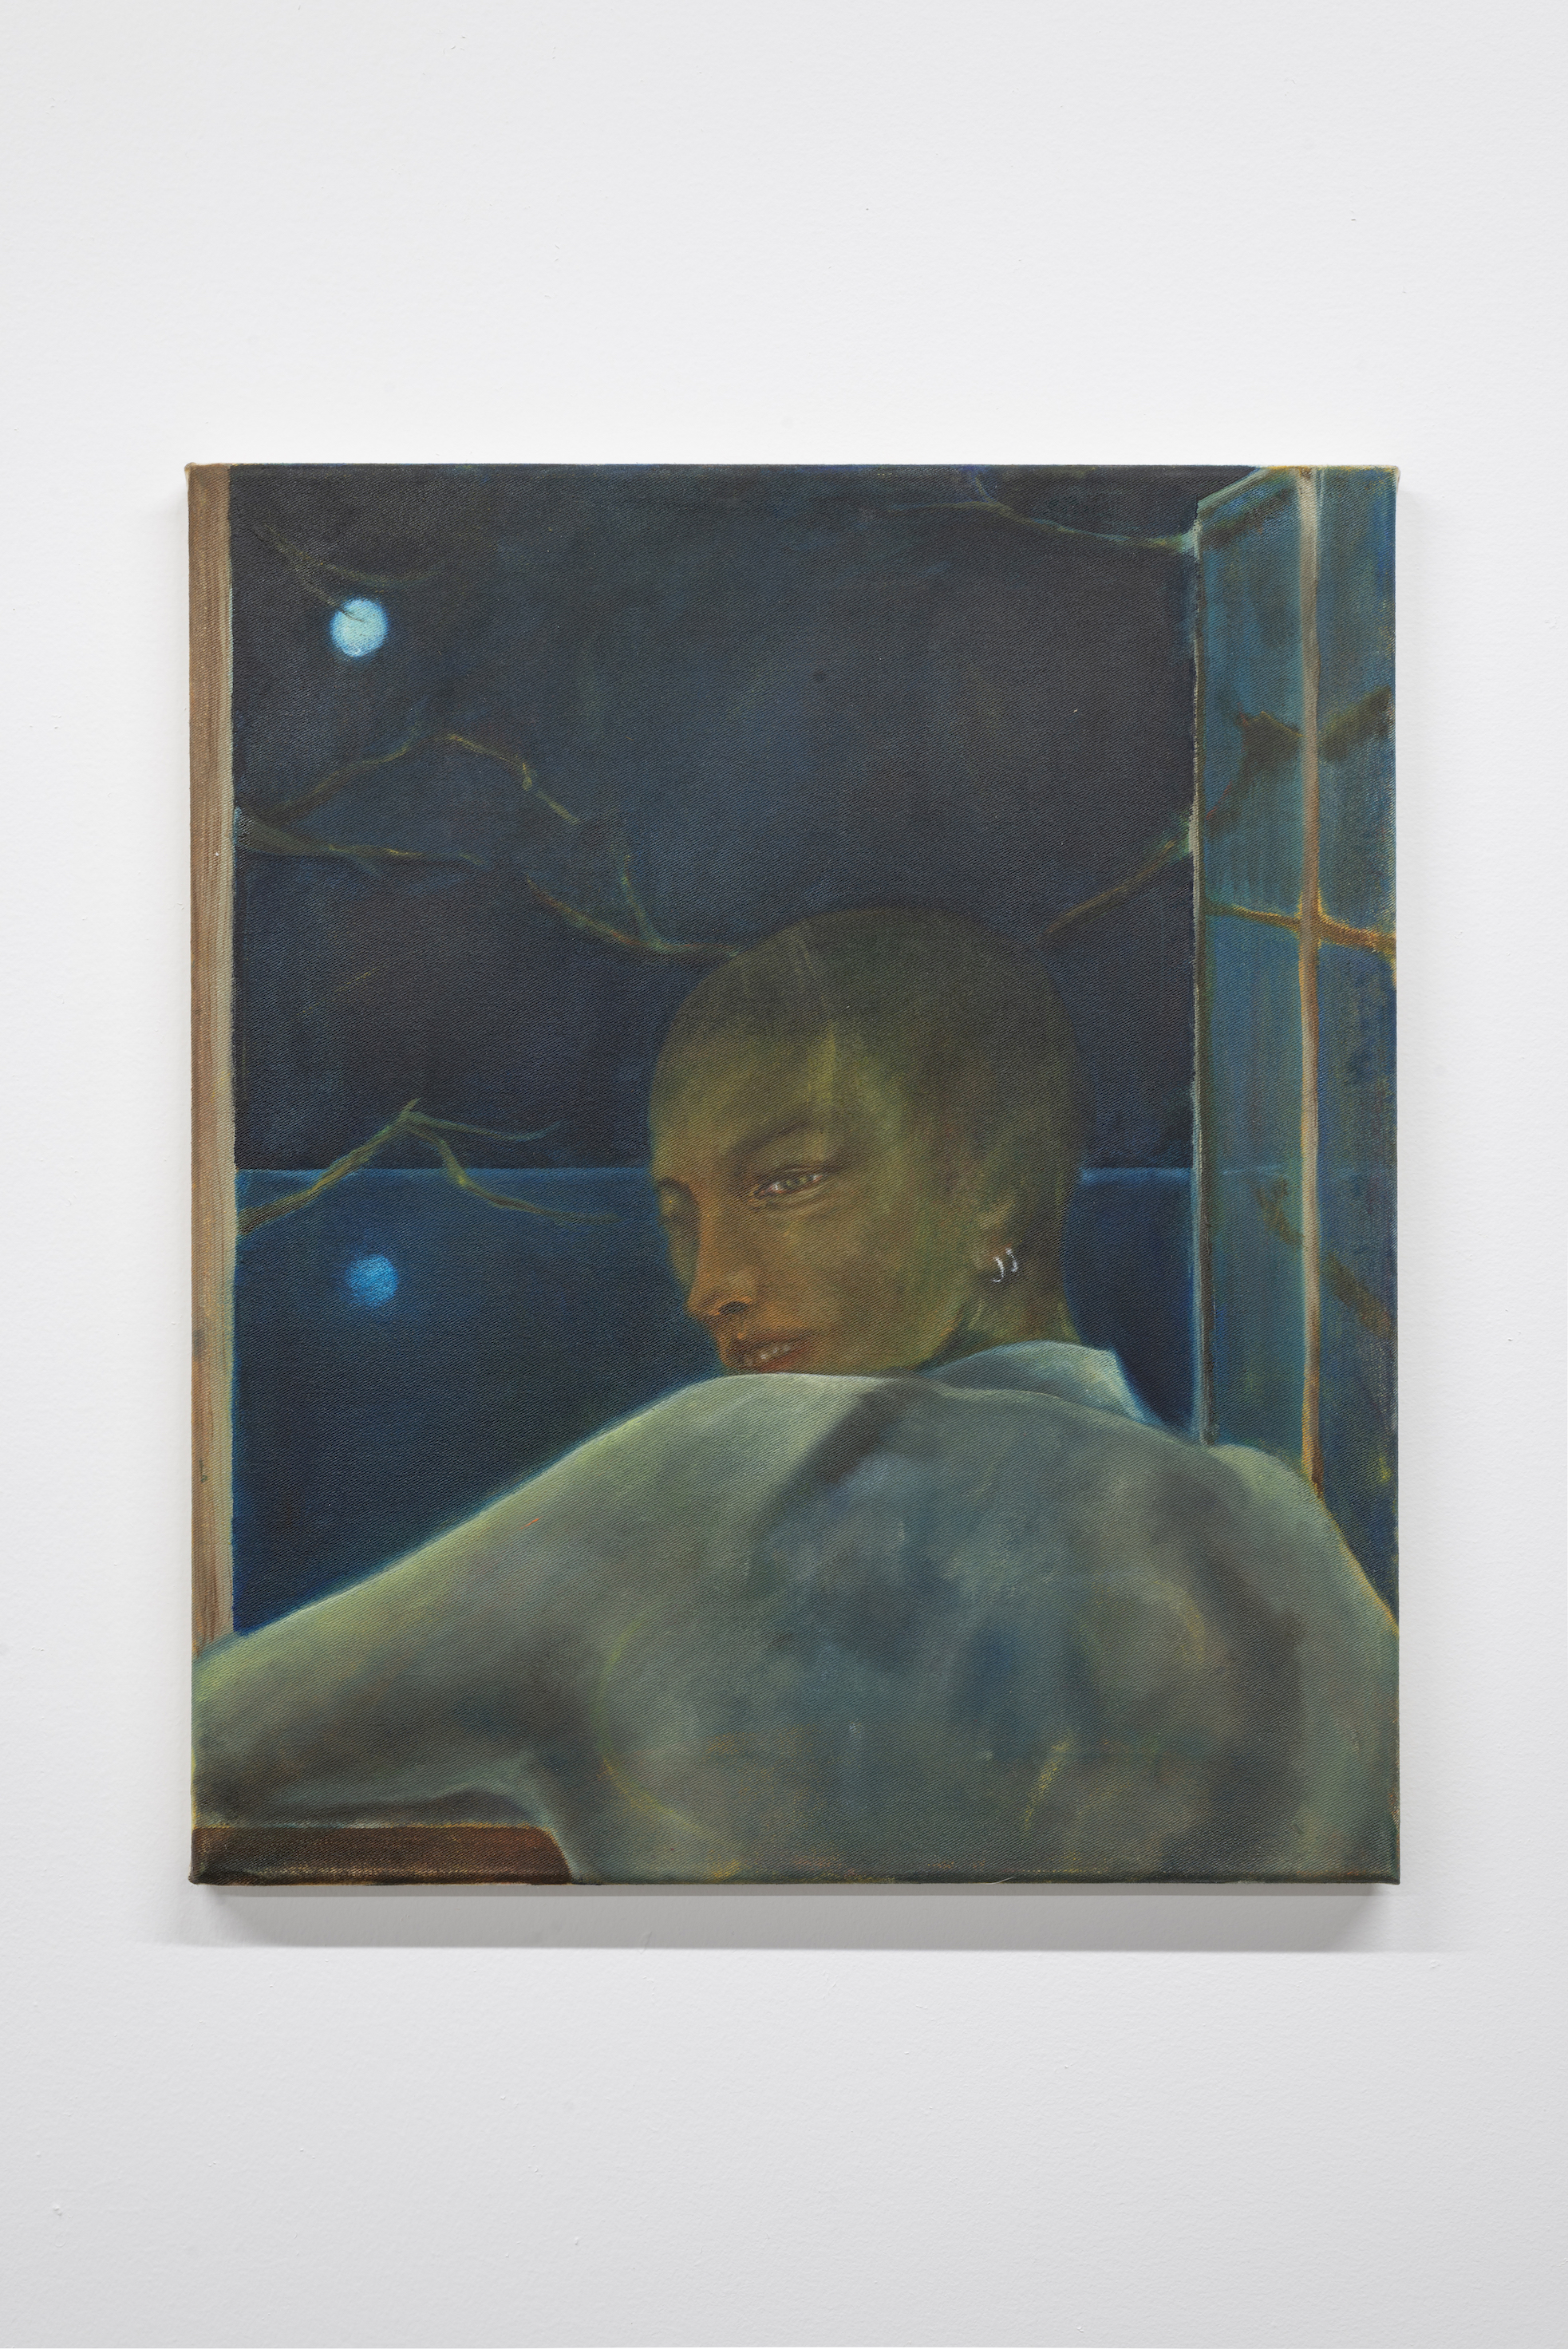  Ernst Yohji Jäger,  Untitled,  2019, Oil on canvas, 20 x 16 inches 